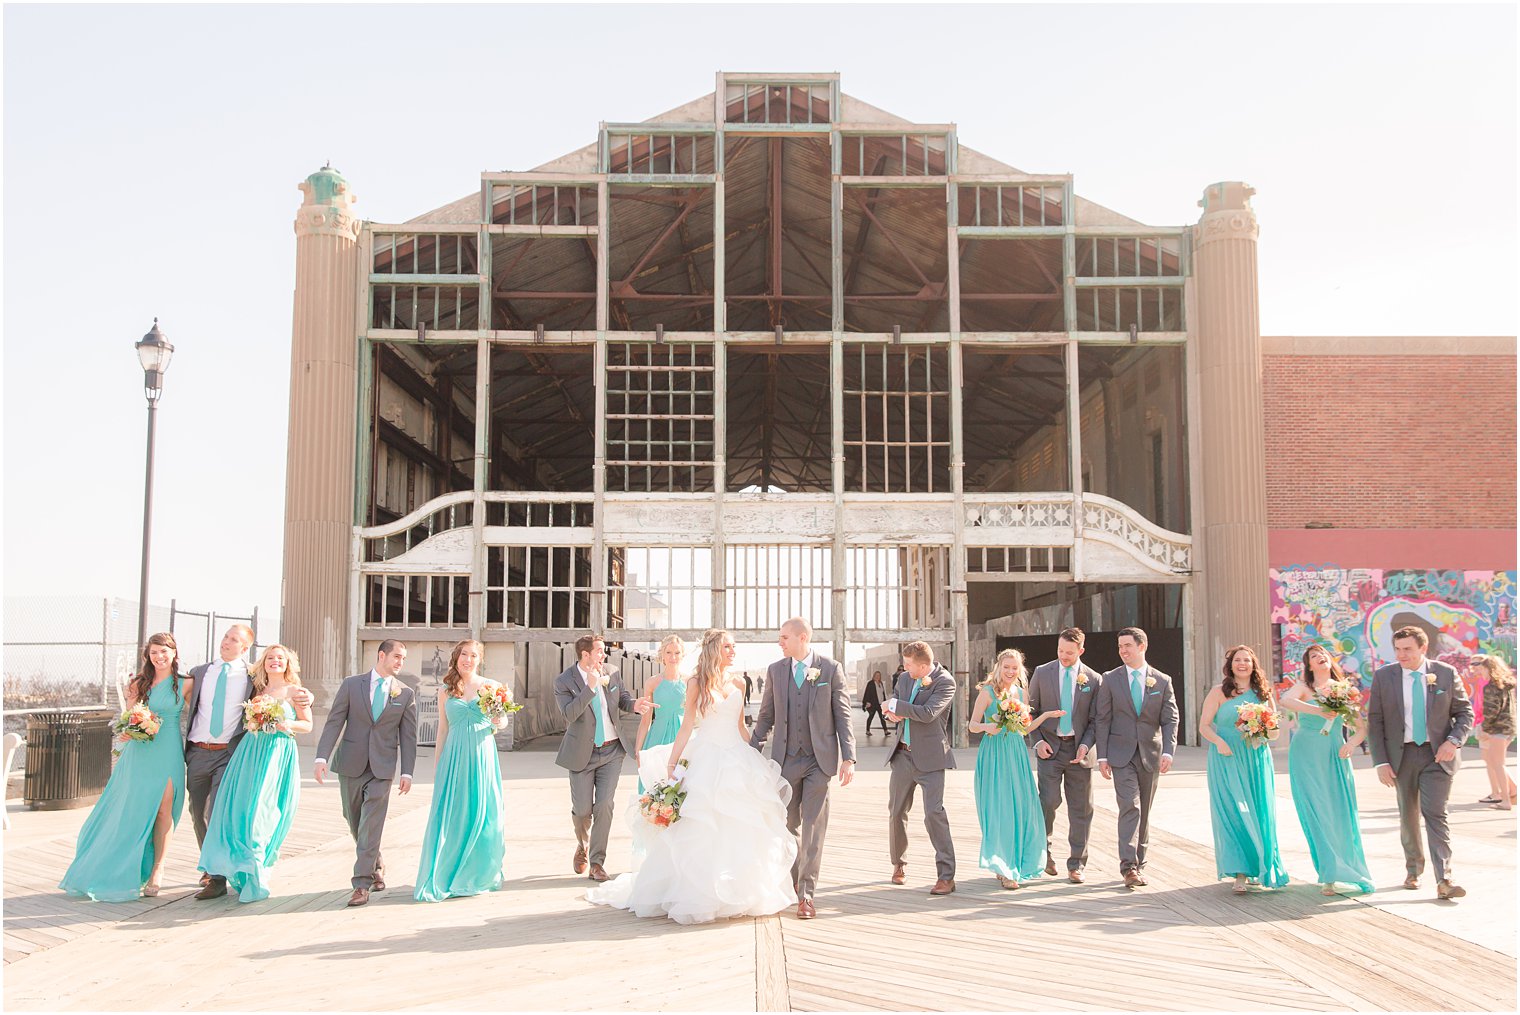 Wedding photos at Asbury Park Boardwalk